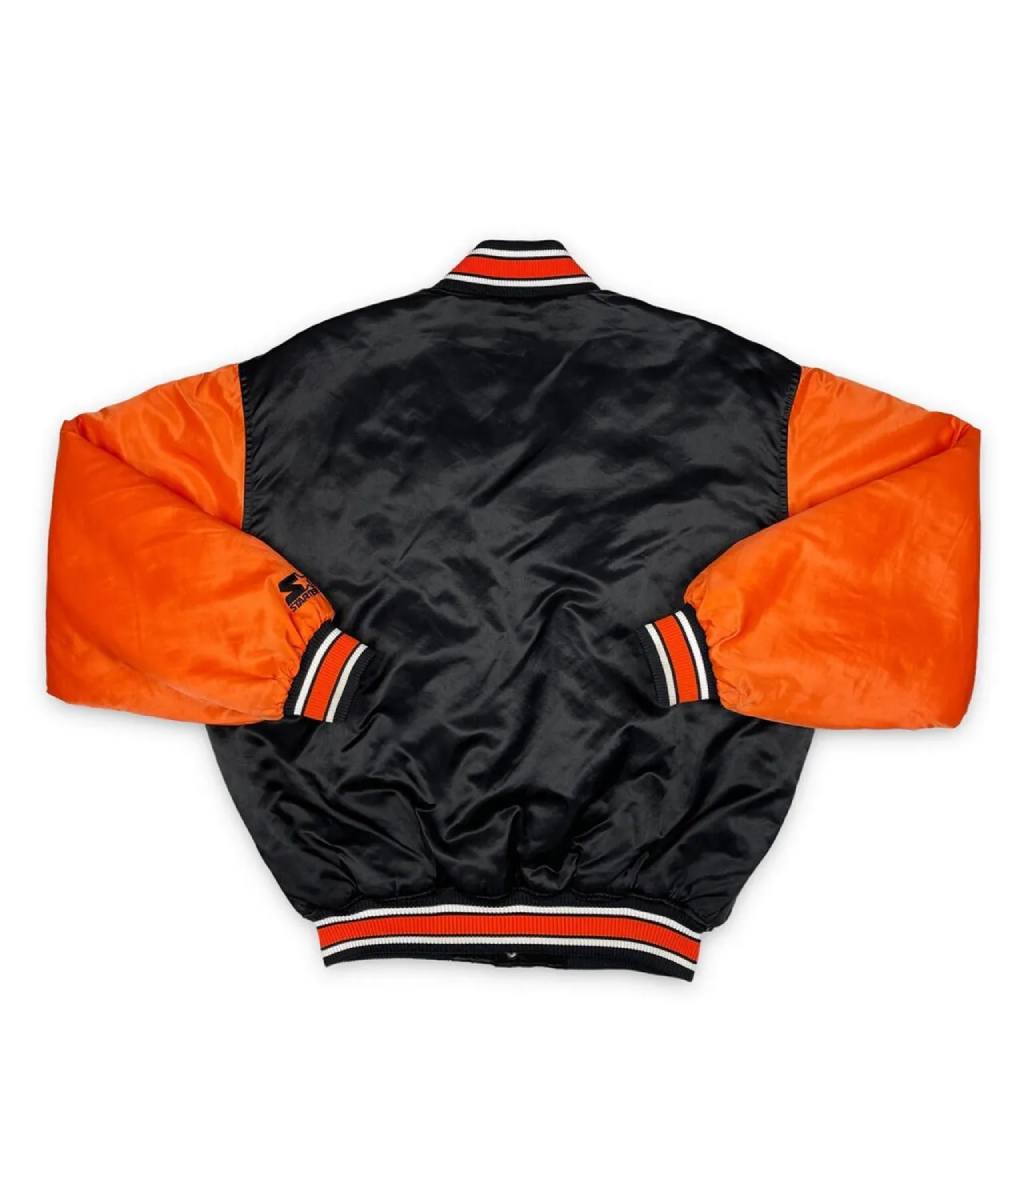 90s-baltimore-orioles-jacket